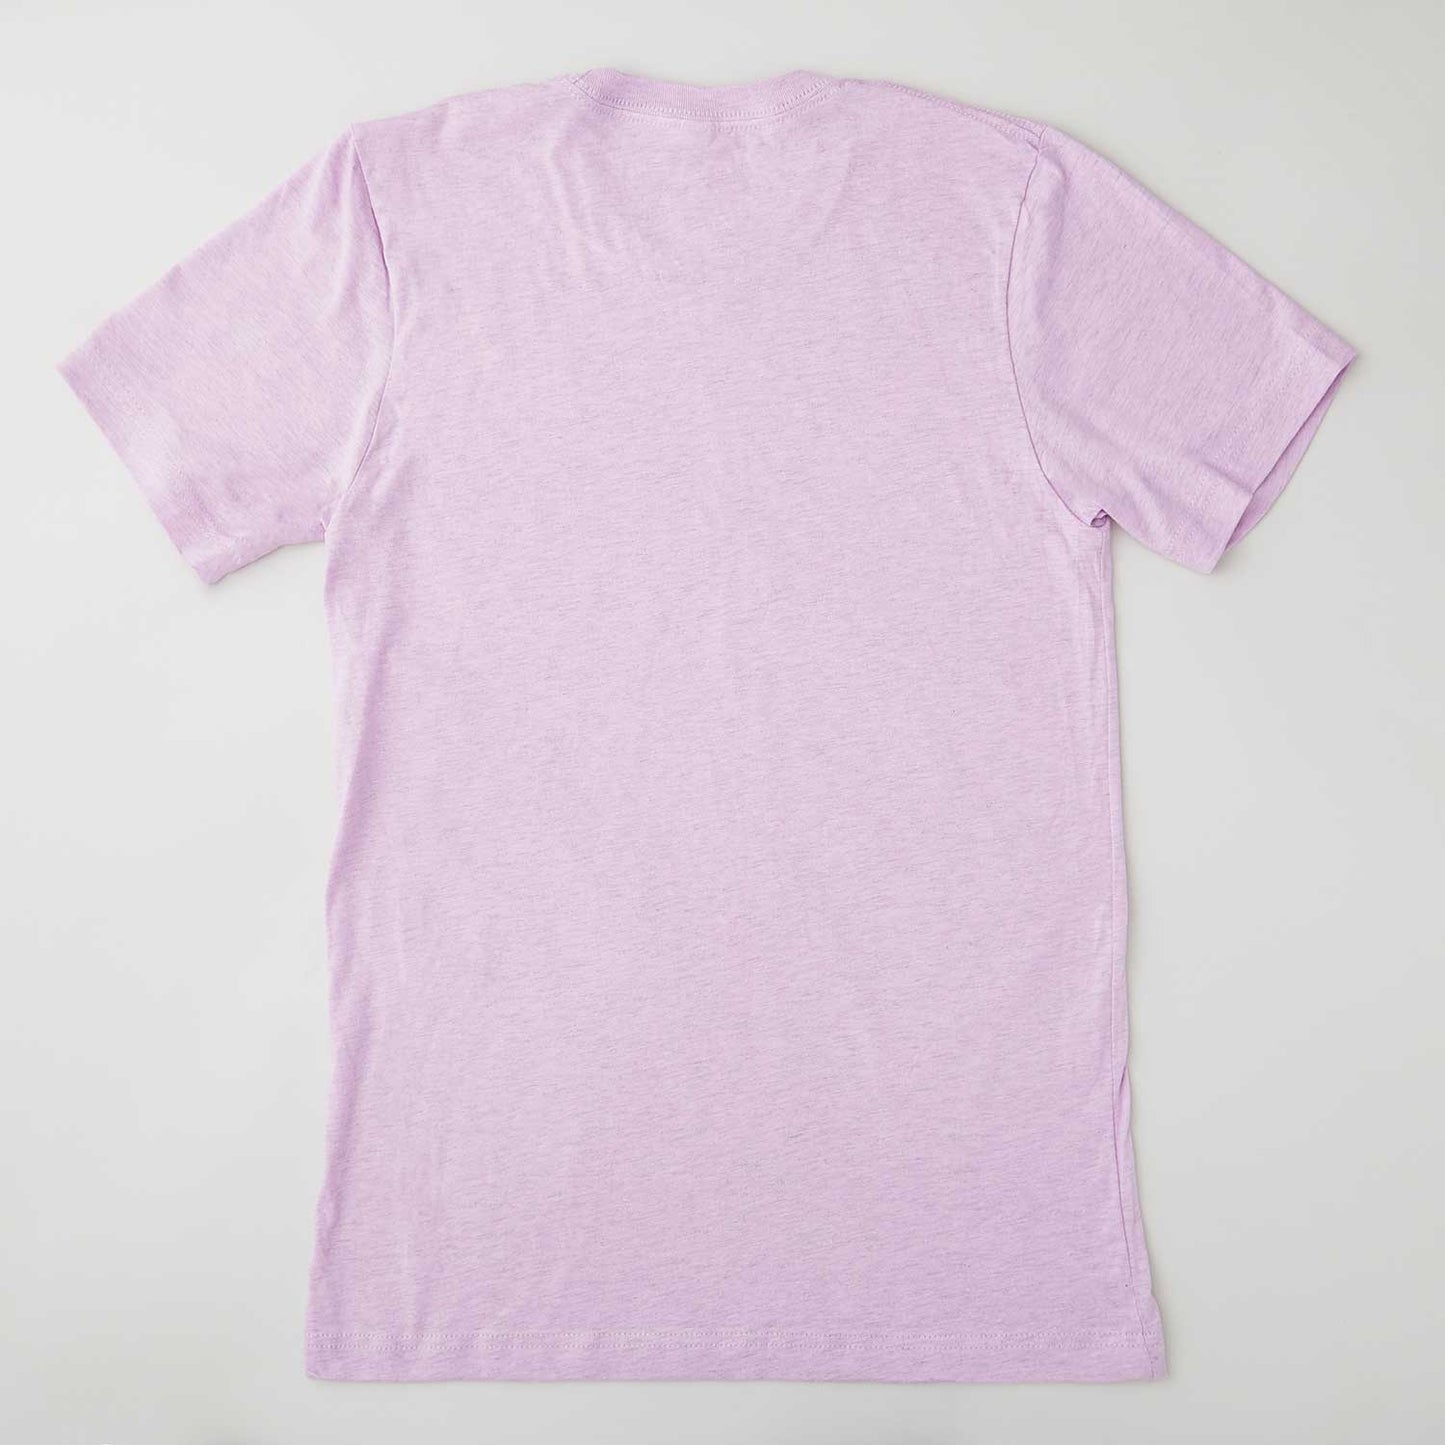 Quiltmaker T-shirt - Heather Prism Lilac - M Alternative View #1